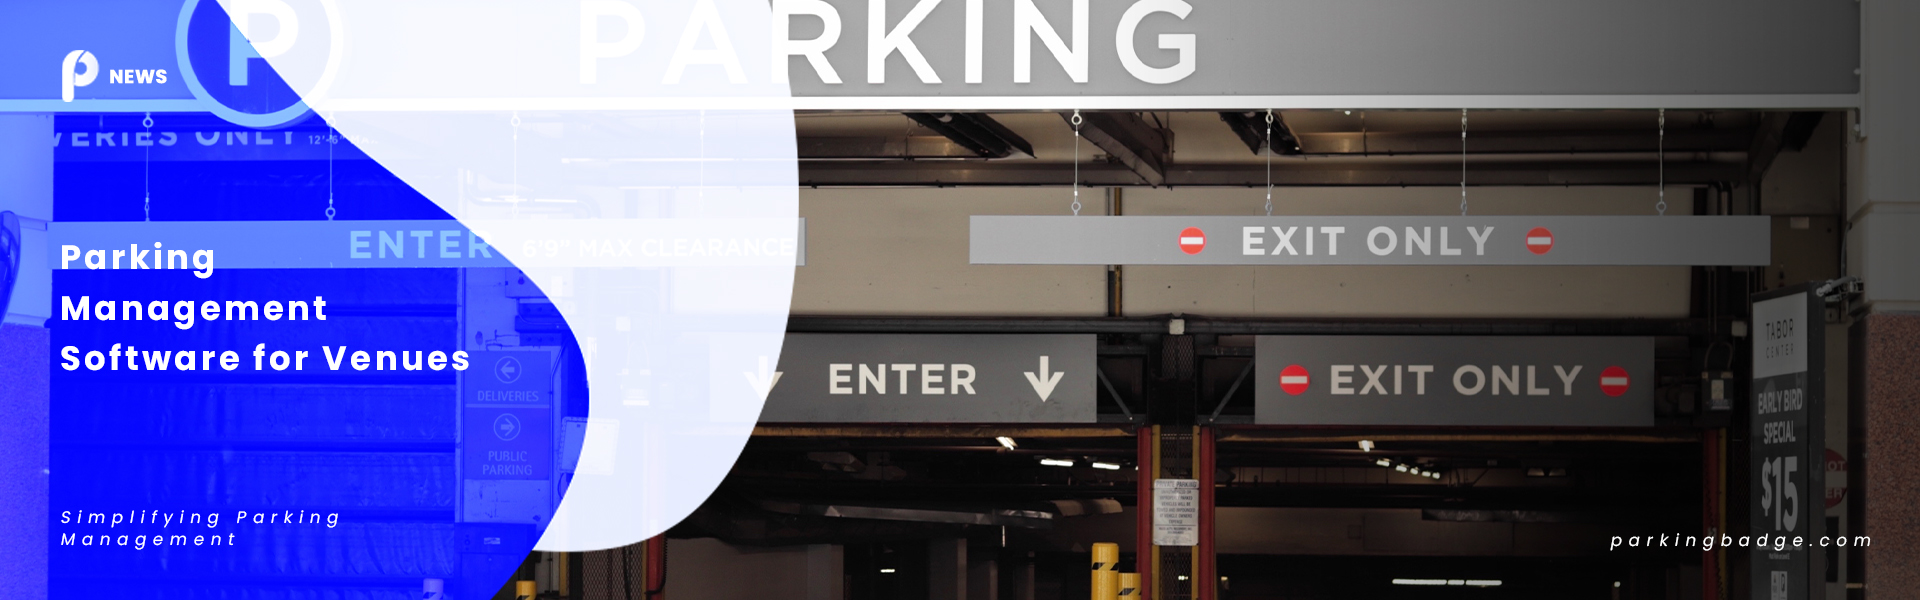 Parking Management Software for Venues